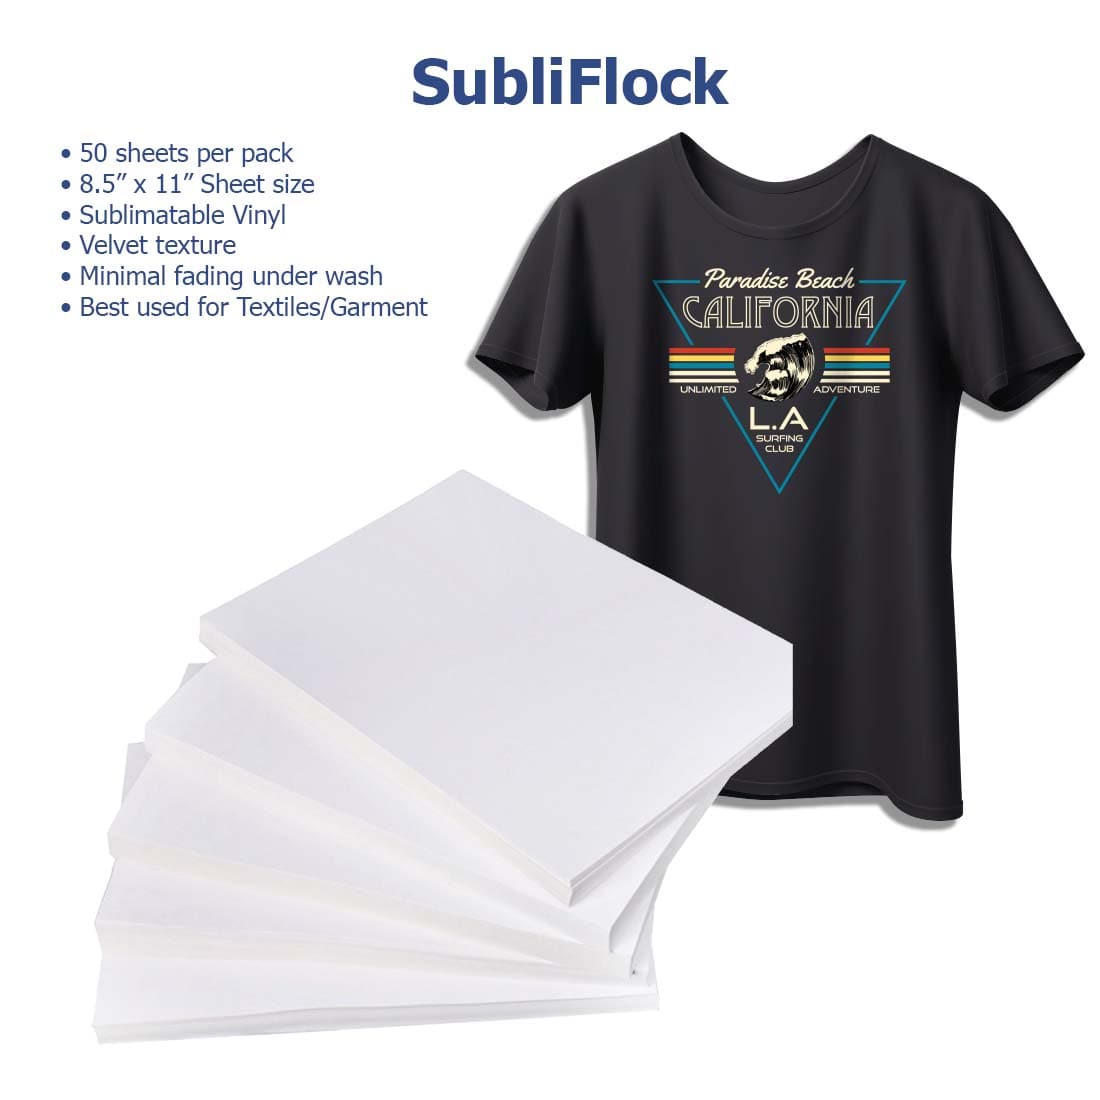 MultiPrint™ SubliFlock Printable Heat Transfer Vinyl